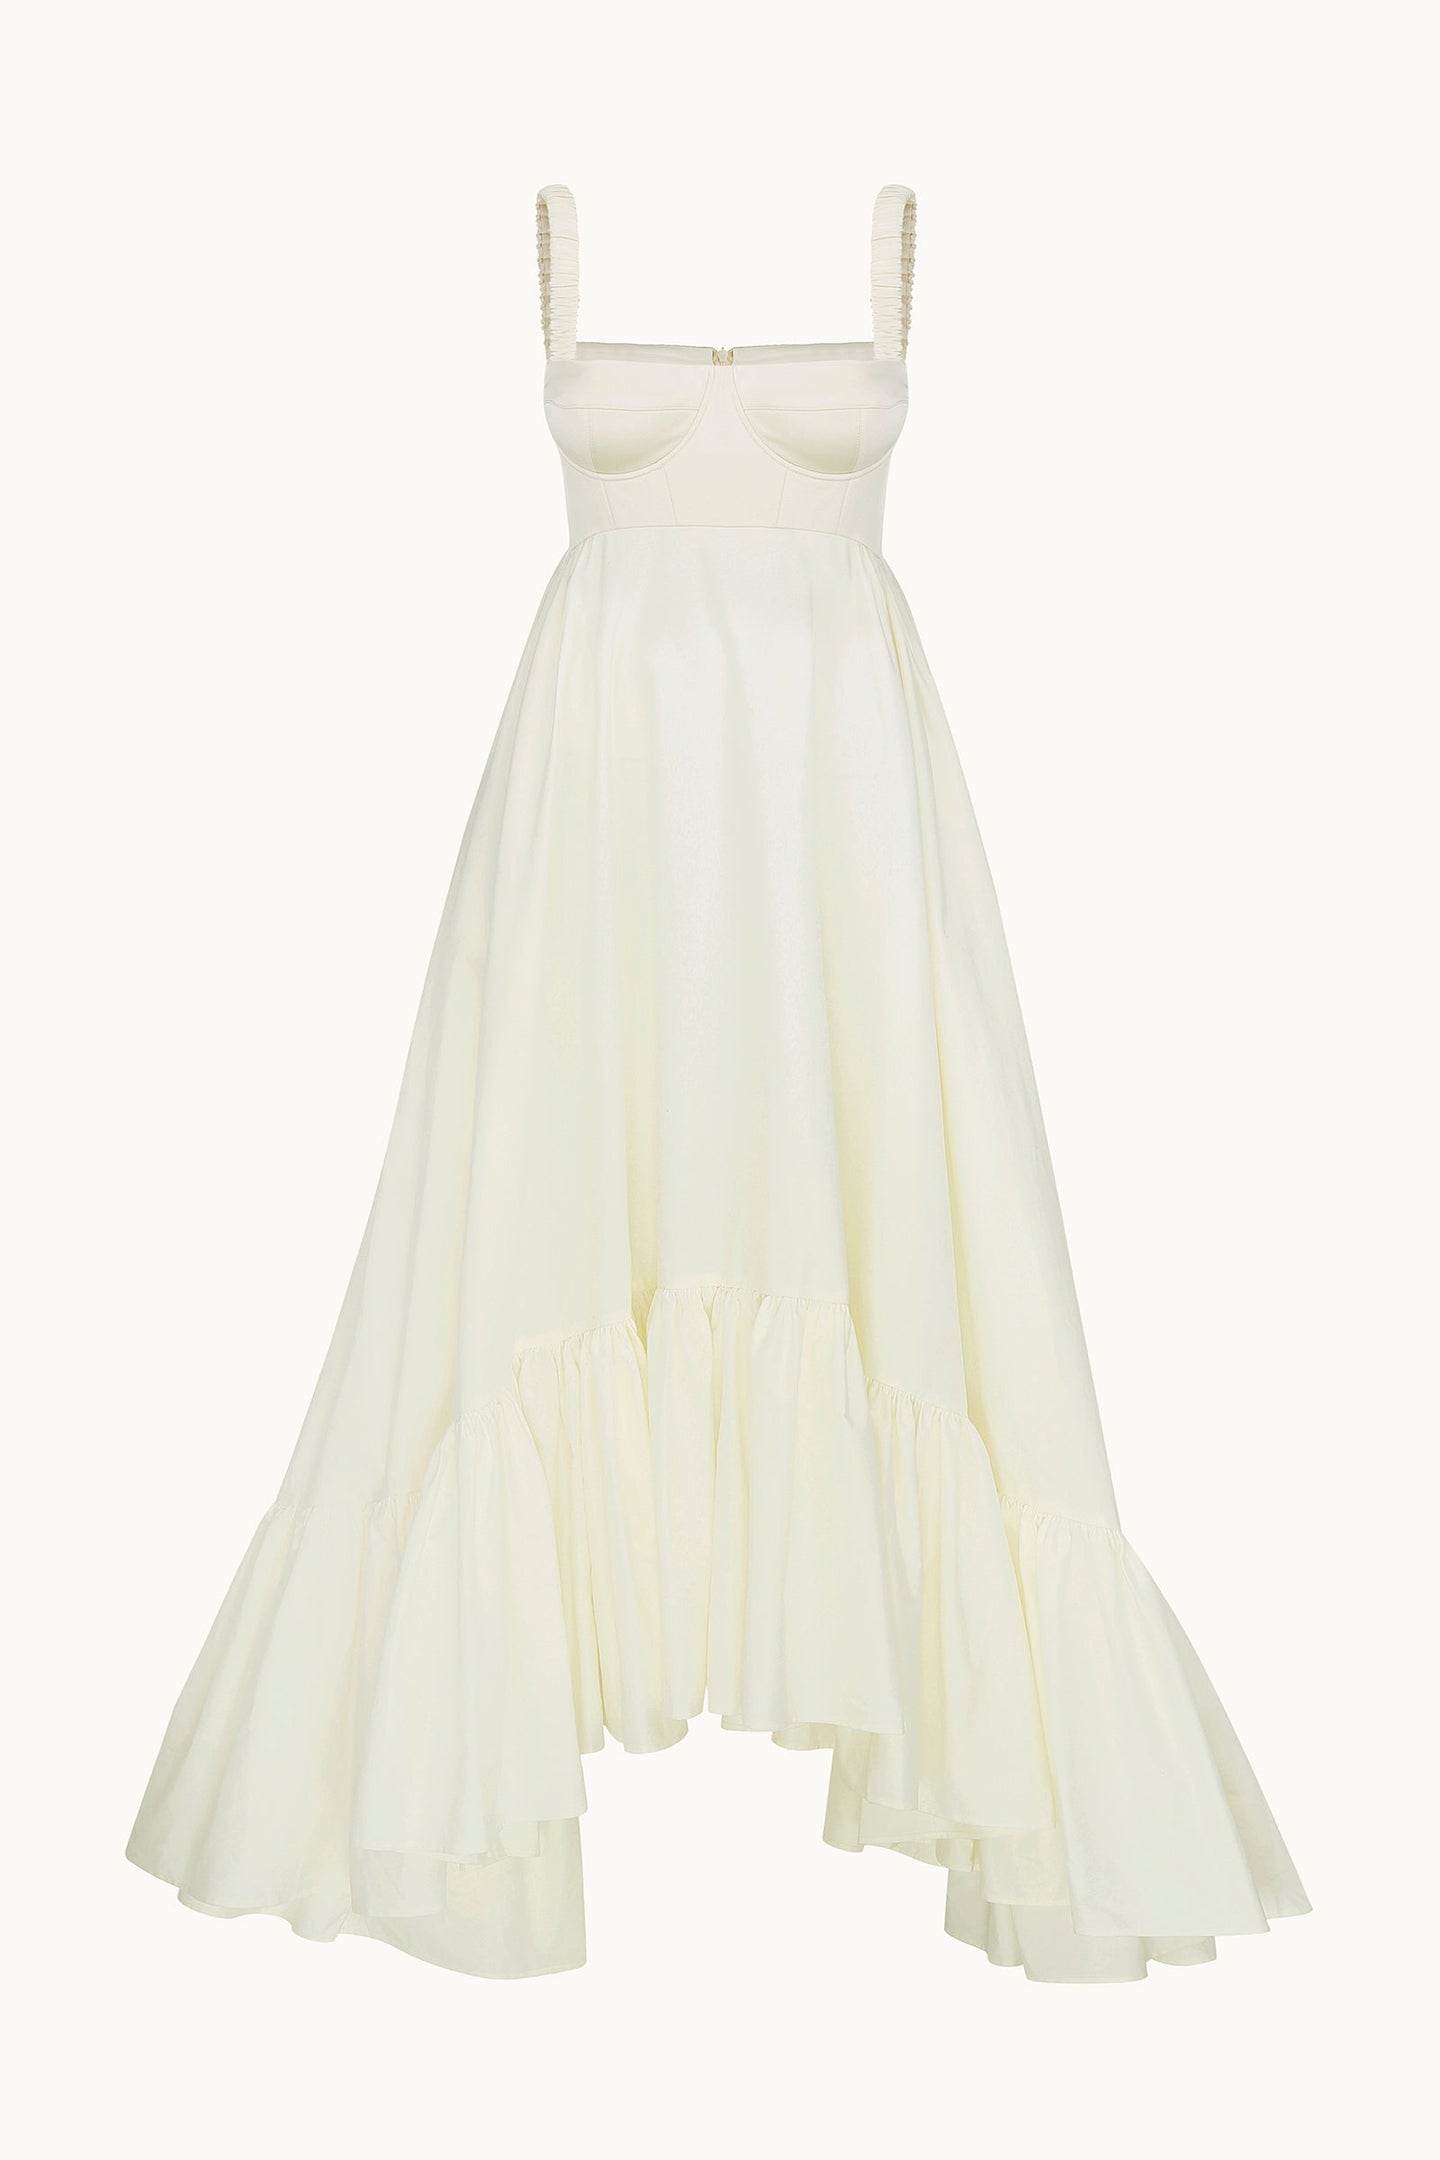 Snowdrop white dress front view